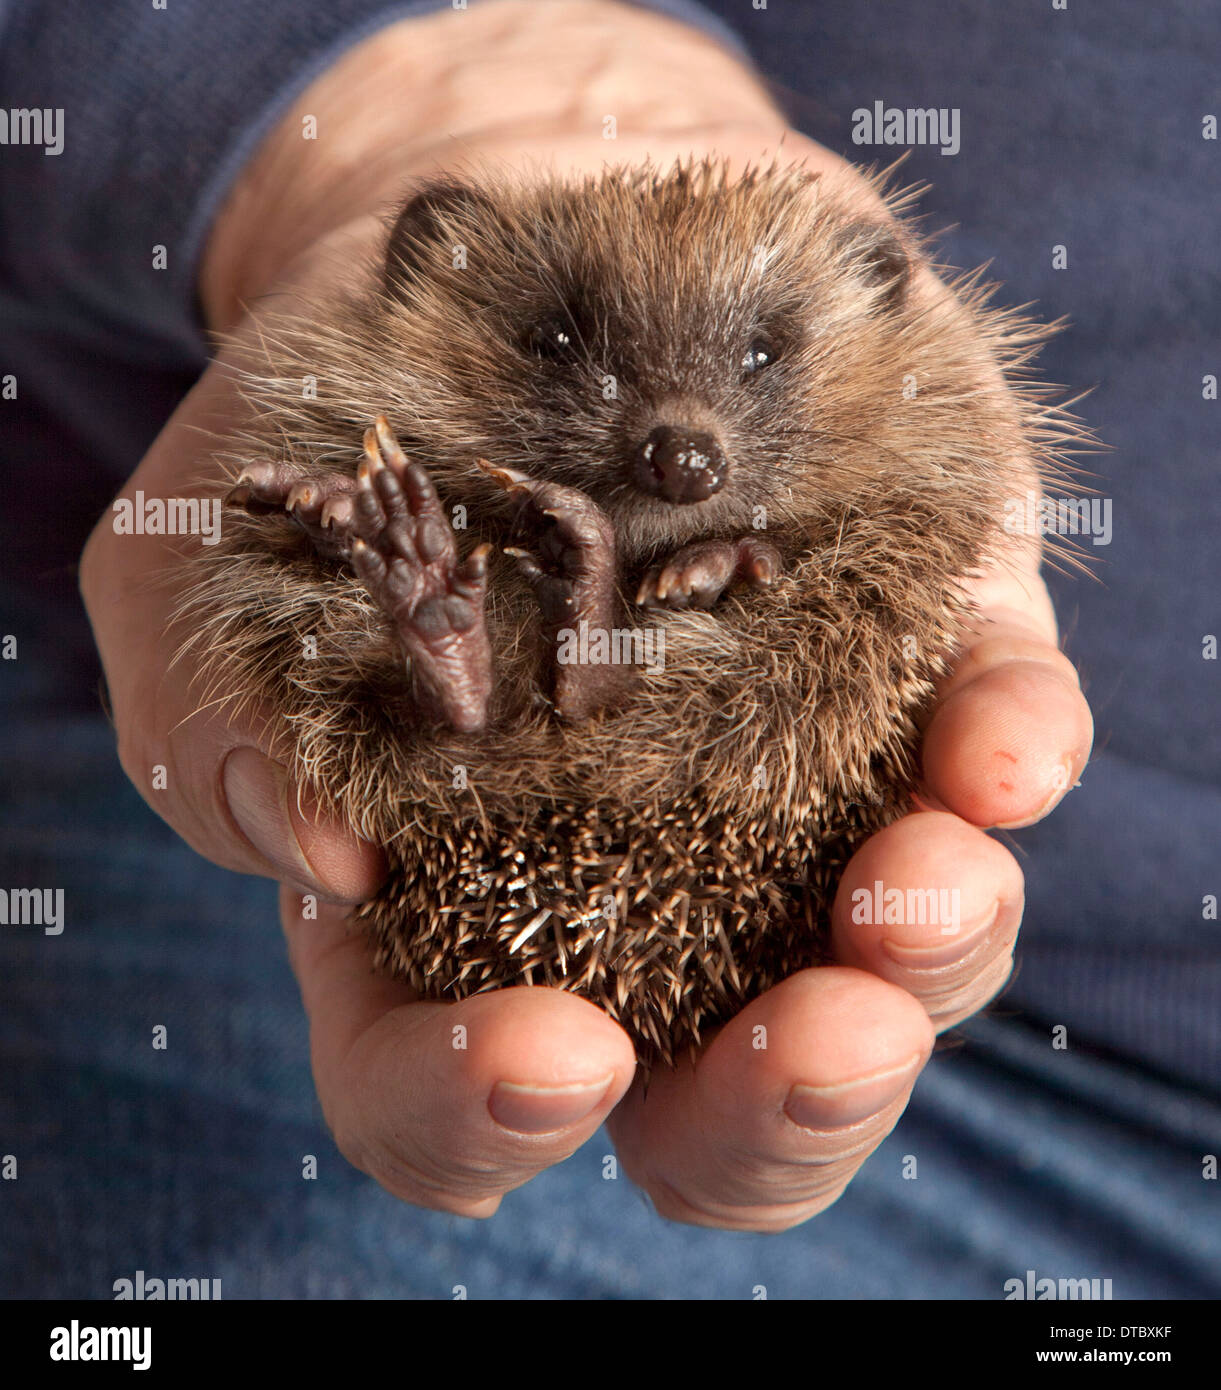 Juvenile European hedgehog in hand Stock Photo